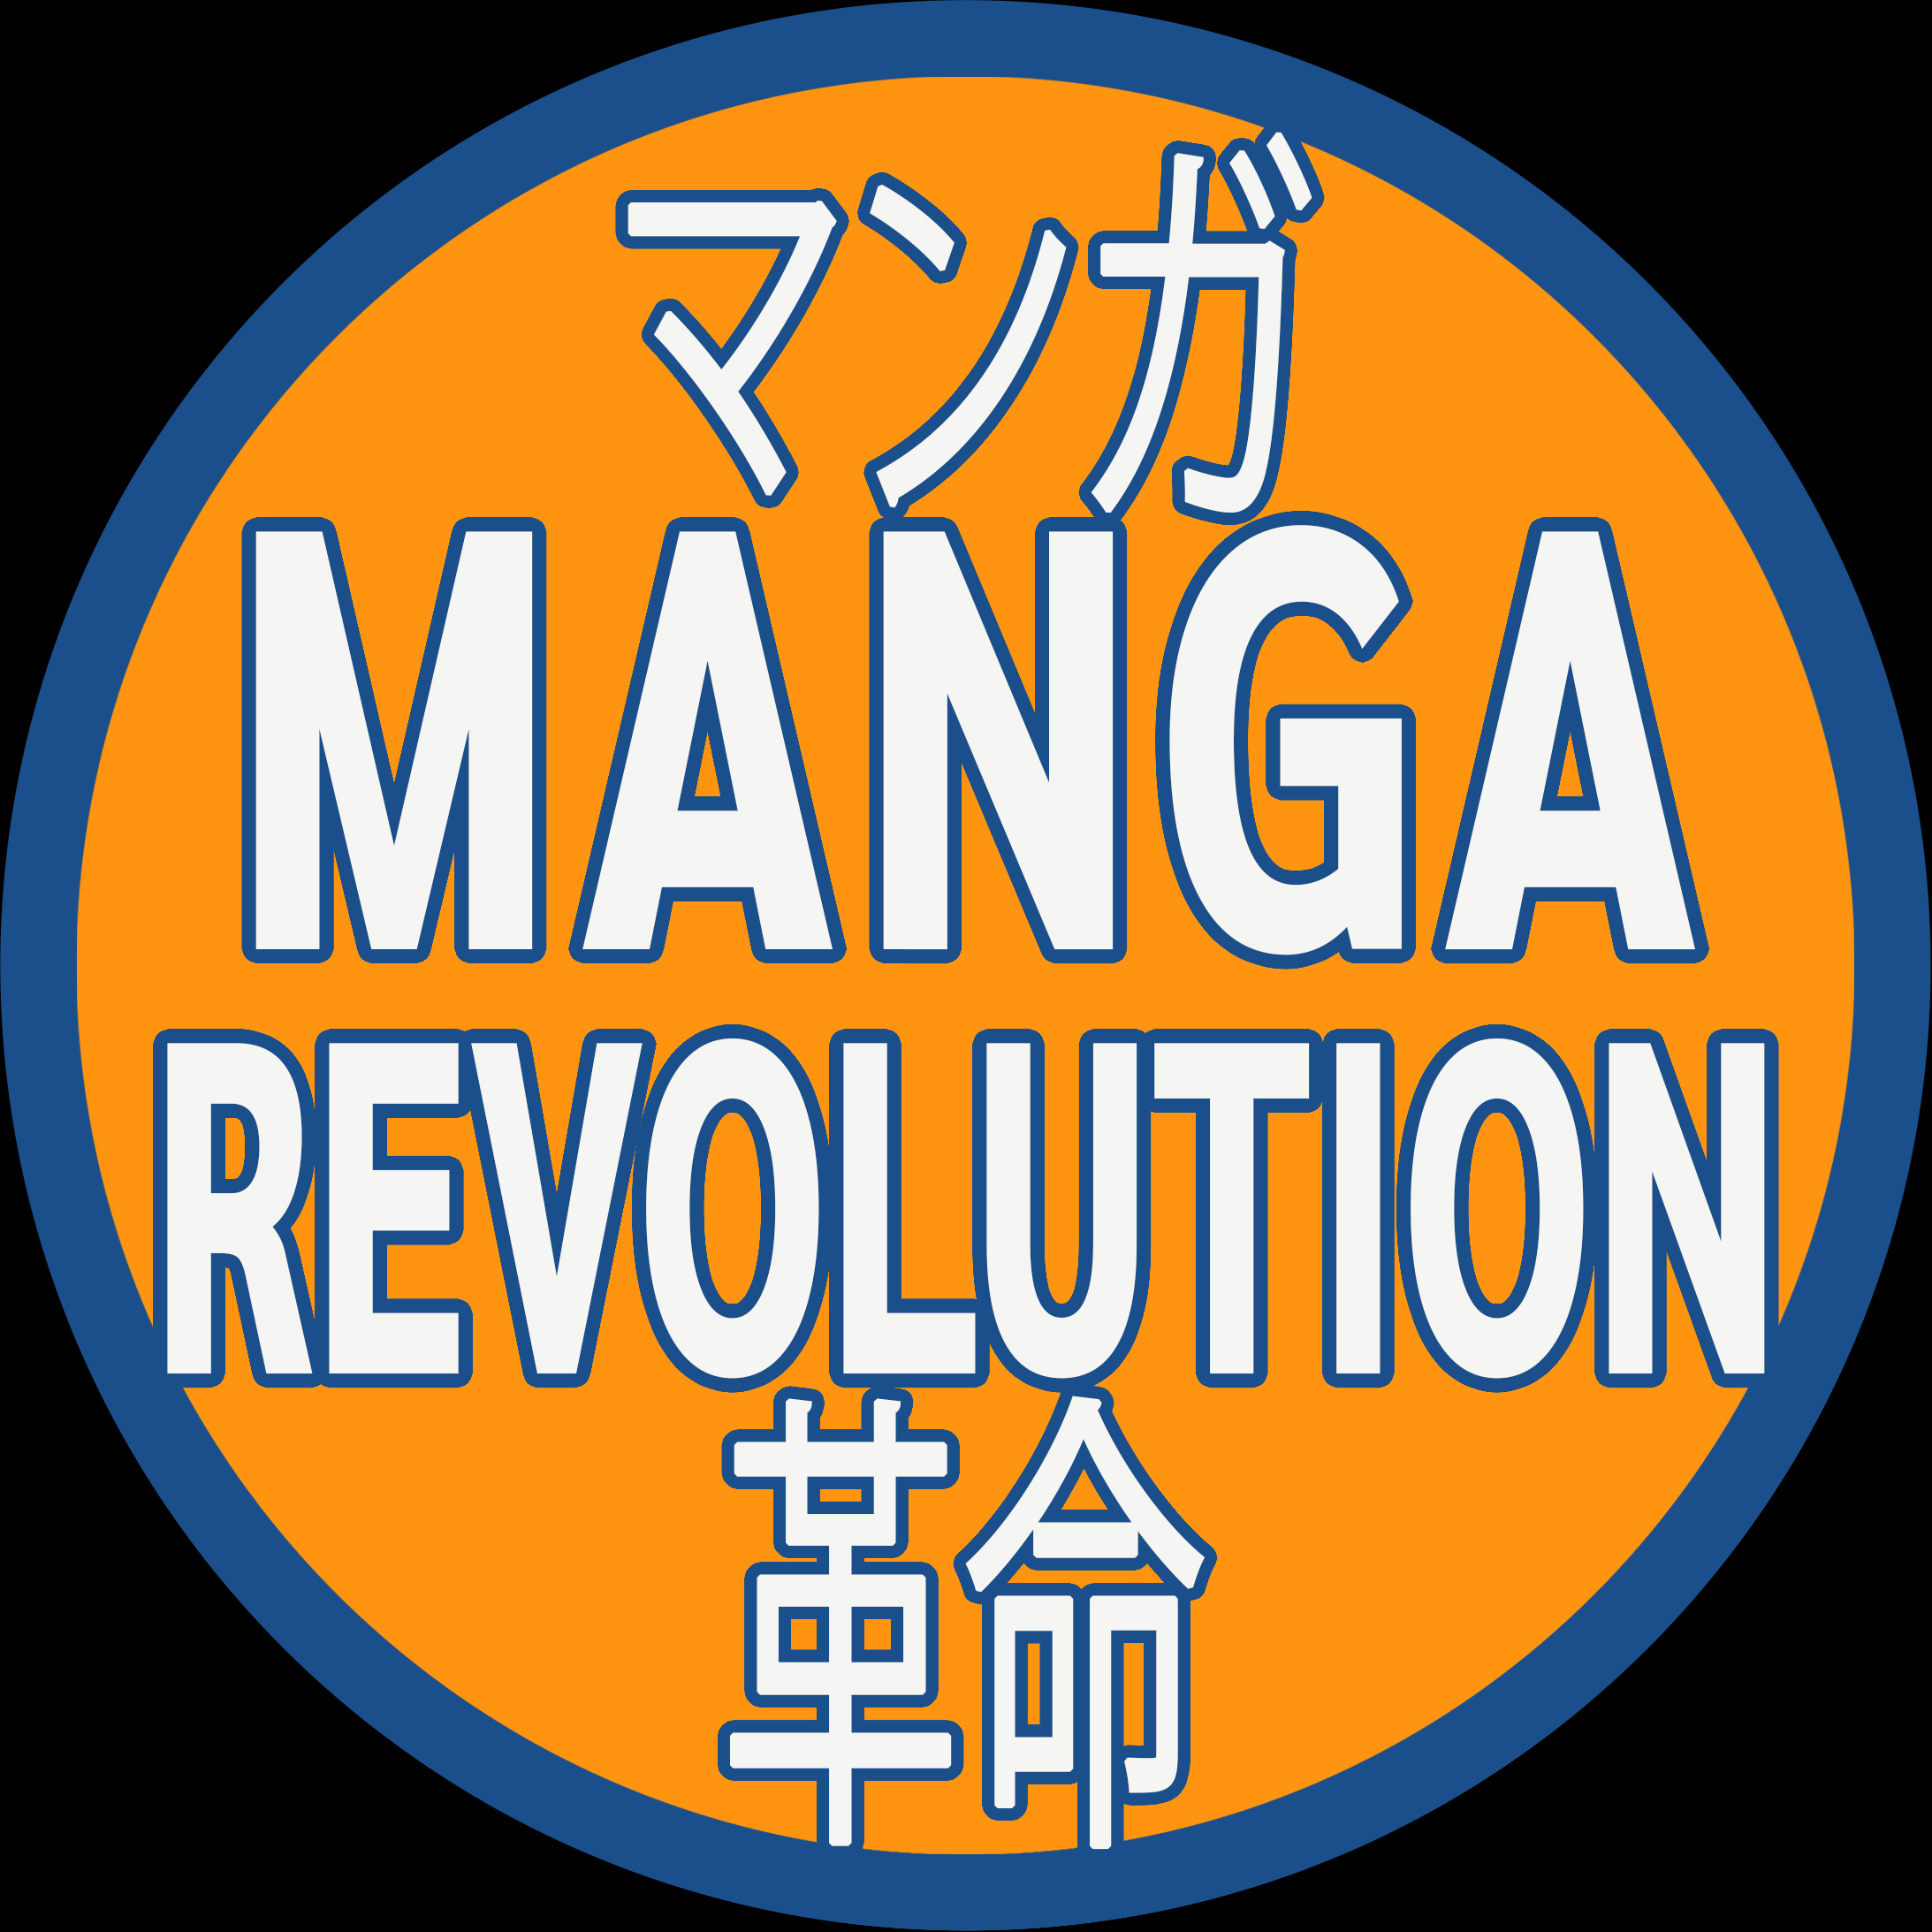 Boruto: Naruto Next Generations "Code Arc" Review - Manga Revolution Podcast Episode 24